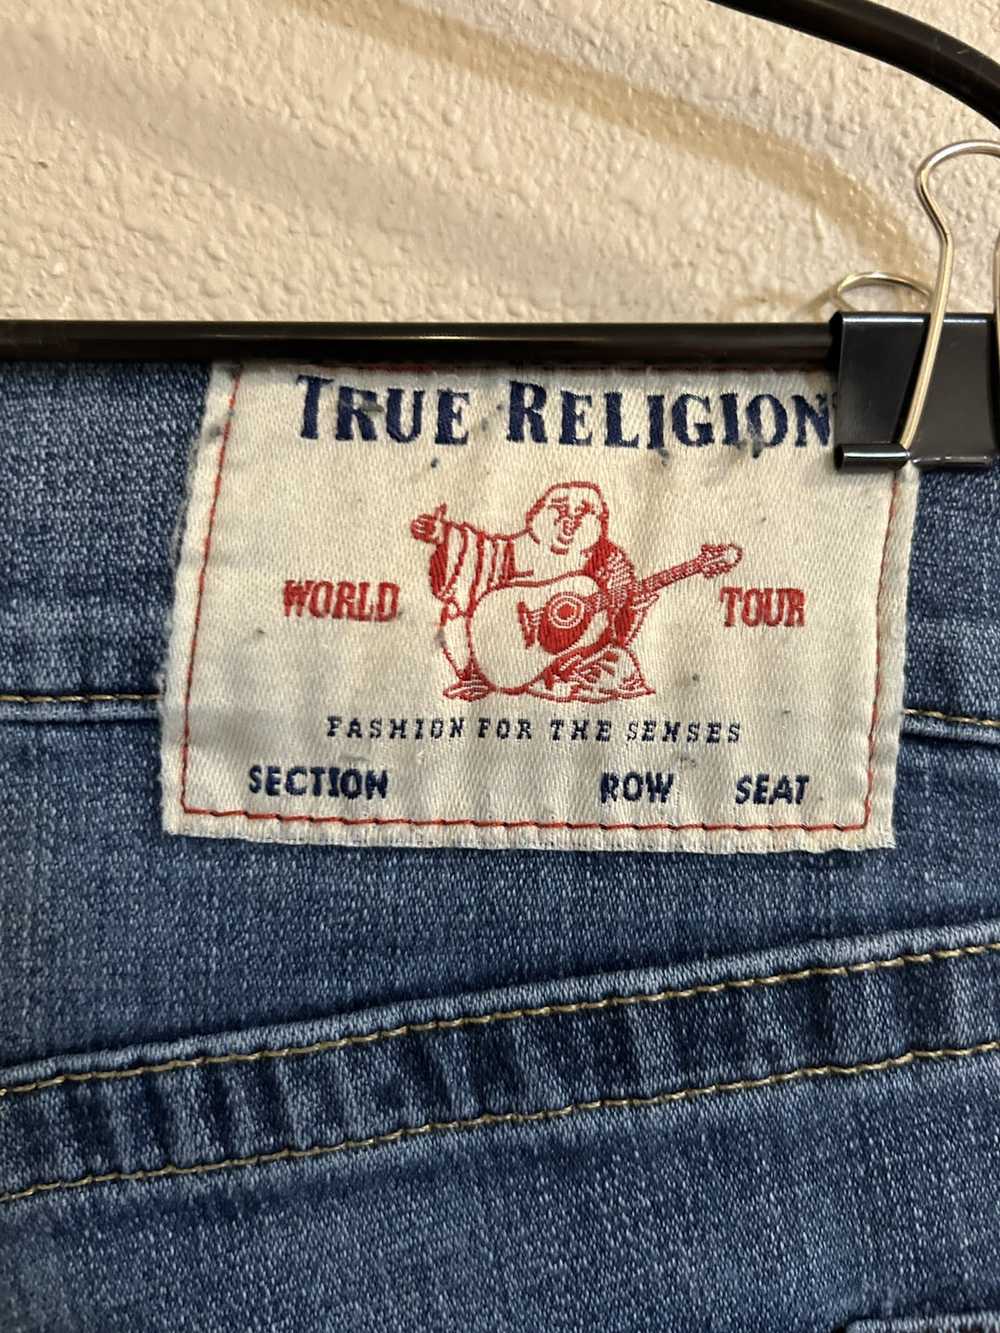 True Religion True Religion Rocco Jeans - 32 waist - image 5